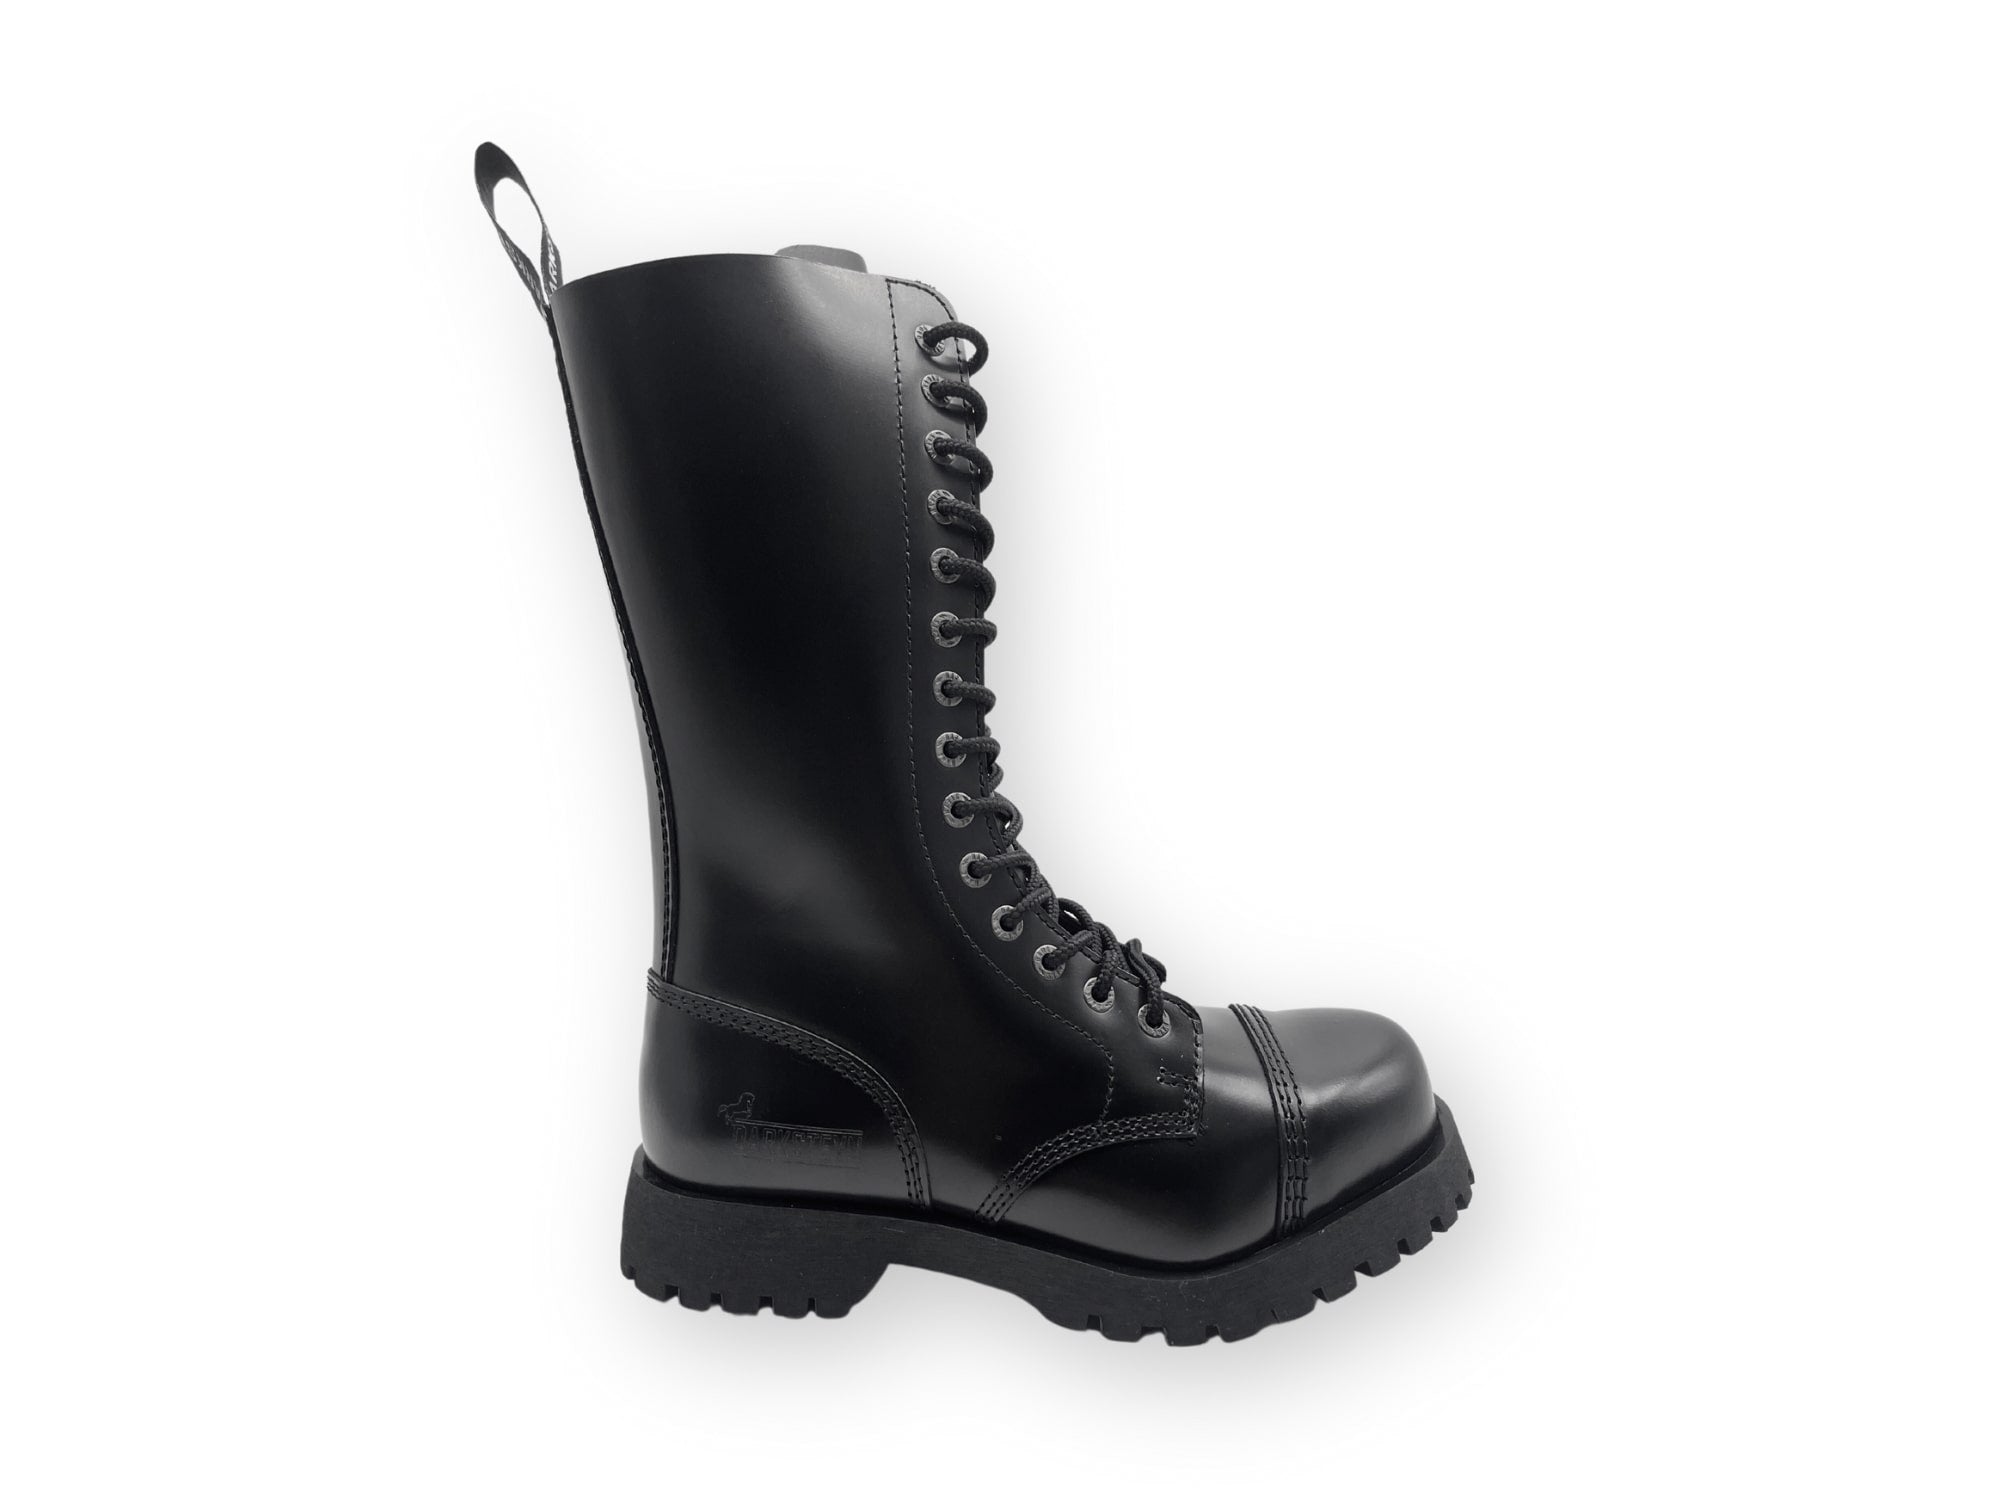 Darksteyn Schuhe 14 Eye Ranger Premium Boots Black